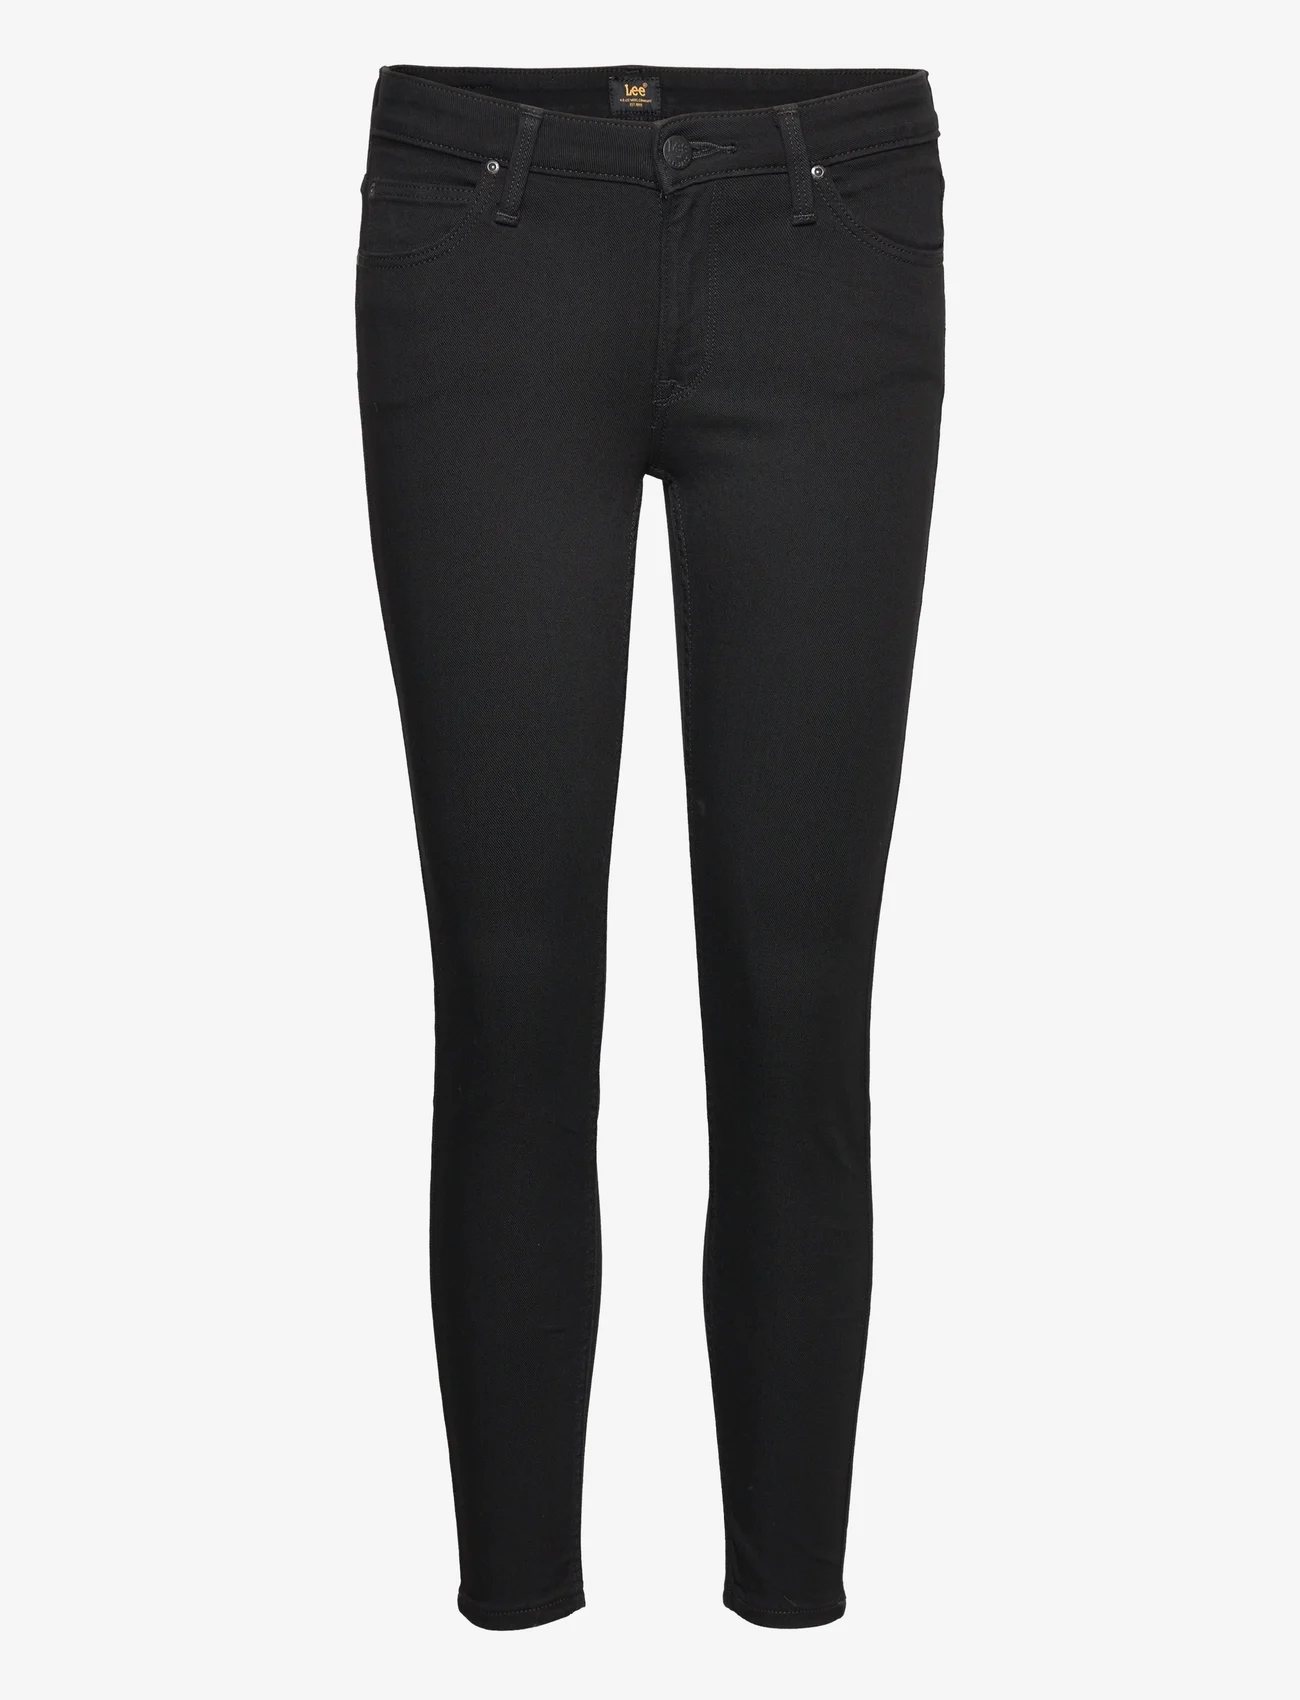 Lee Jeans - SCARLETT - skinny jeans - black rinse - 0